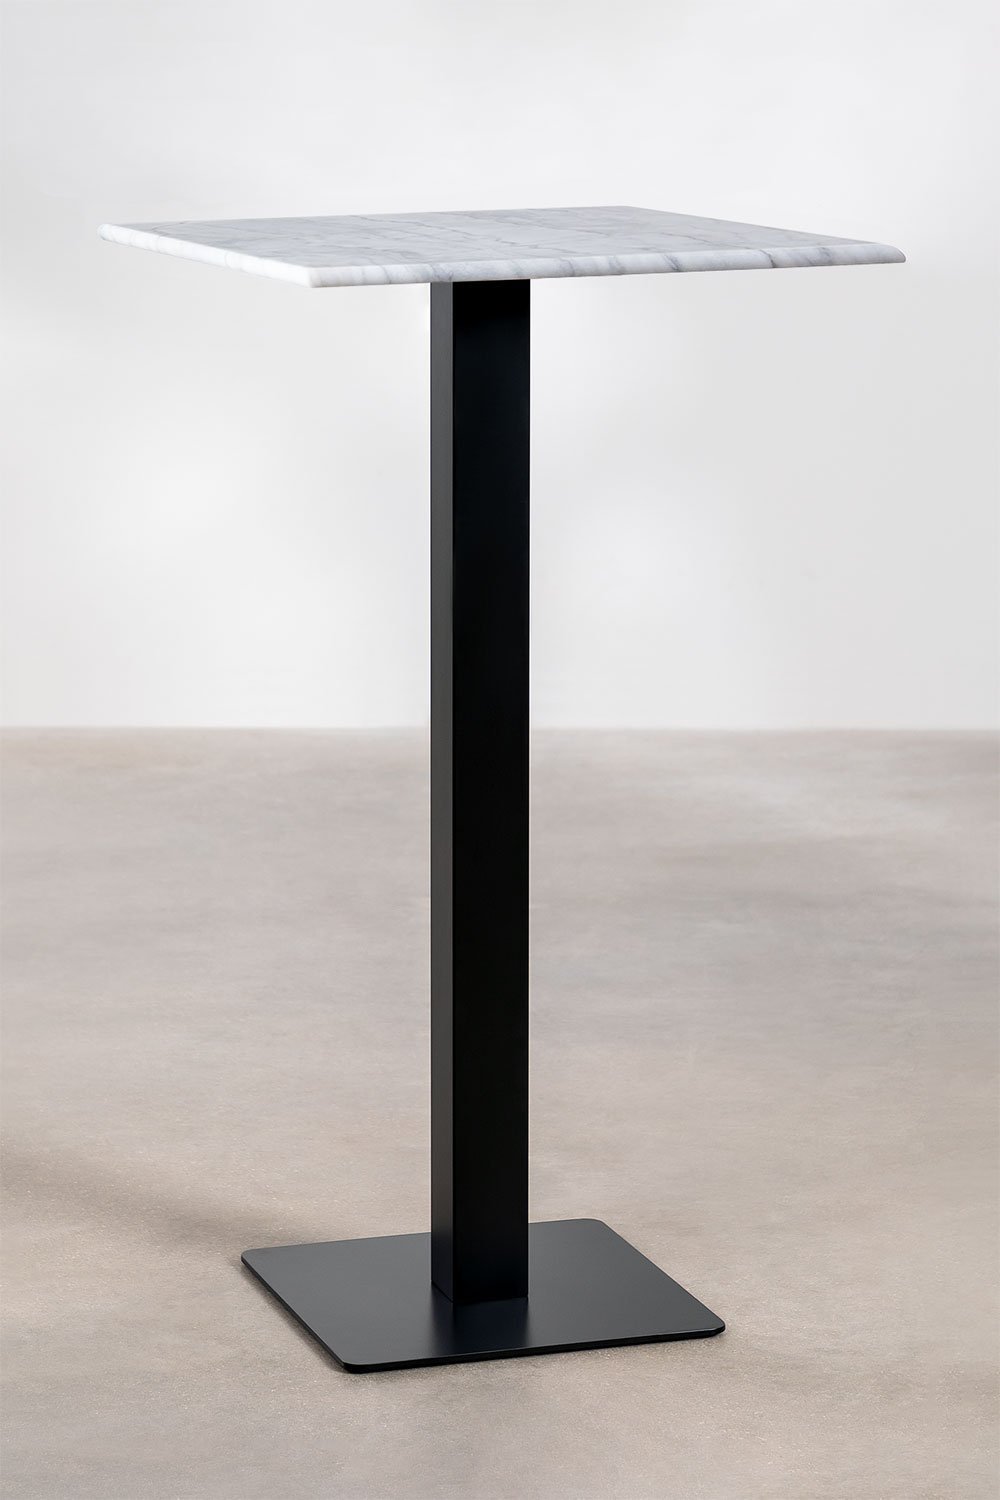 Vierkante hoge bartafel in Livanto-marmer, galerij beeld 1